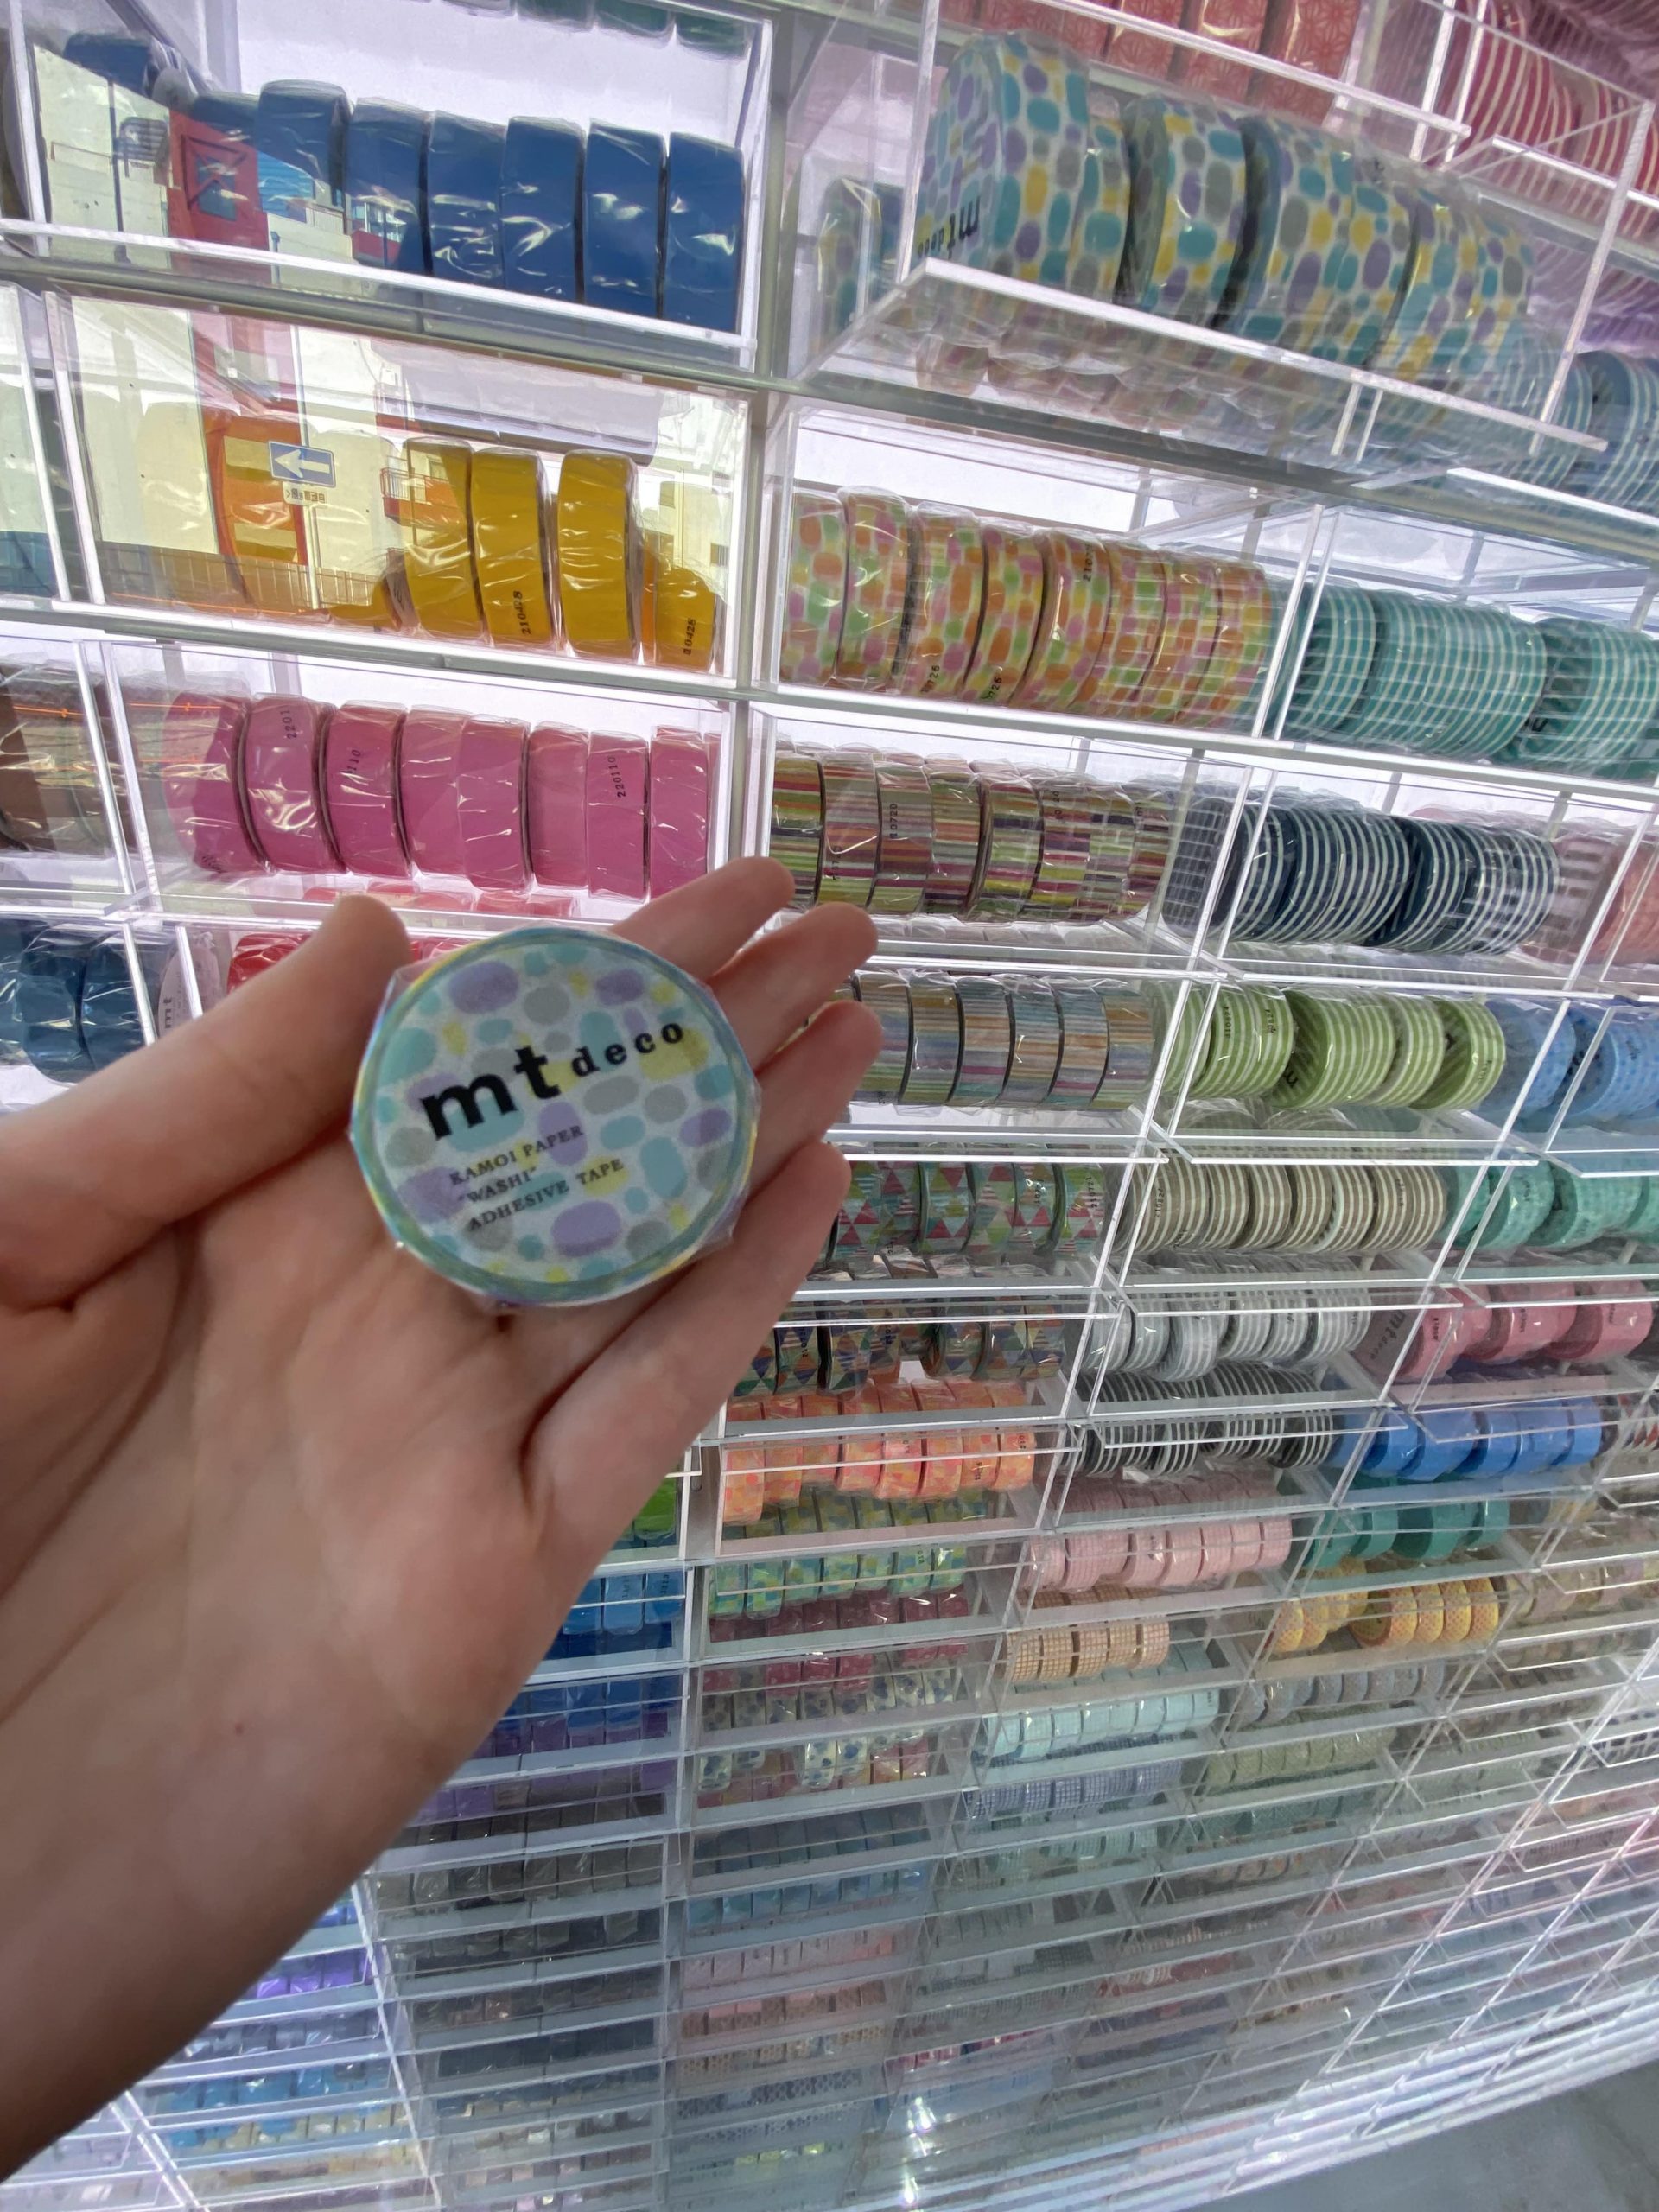 mt masking tape osaka japan store best japanese washi tape shops for planner addicts patterns floral chevron polka dot stripes solid color 10mm 7m